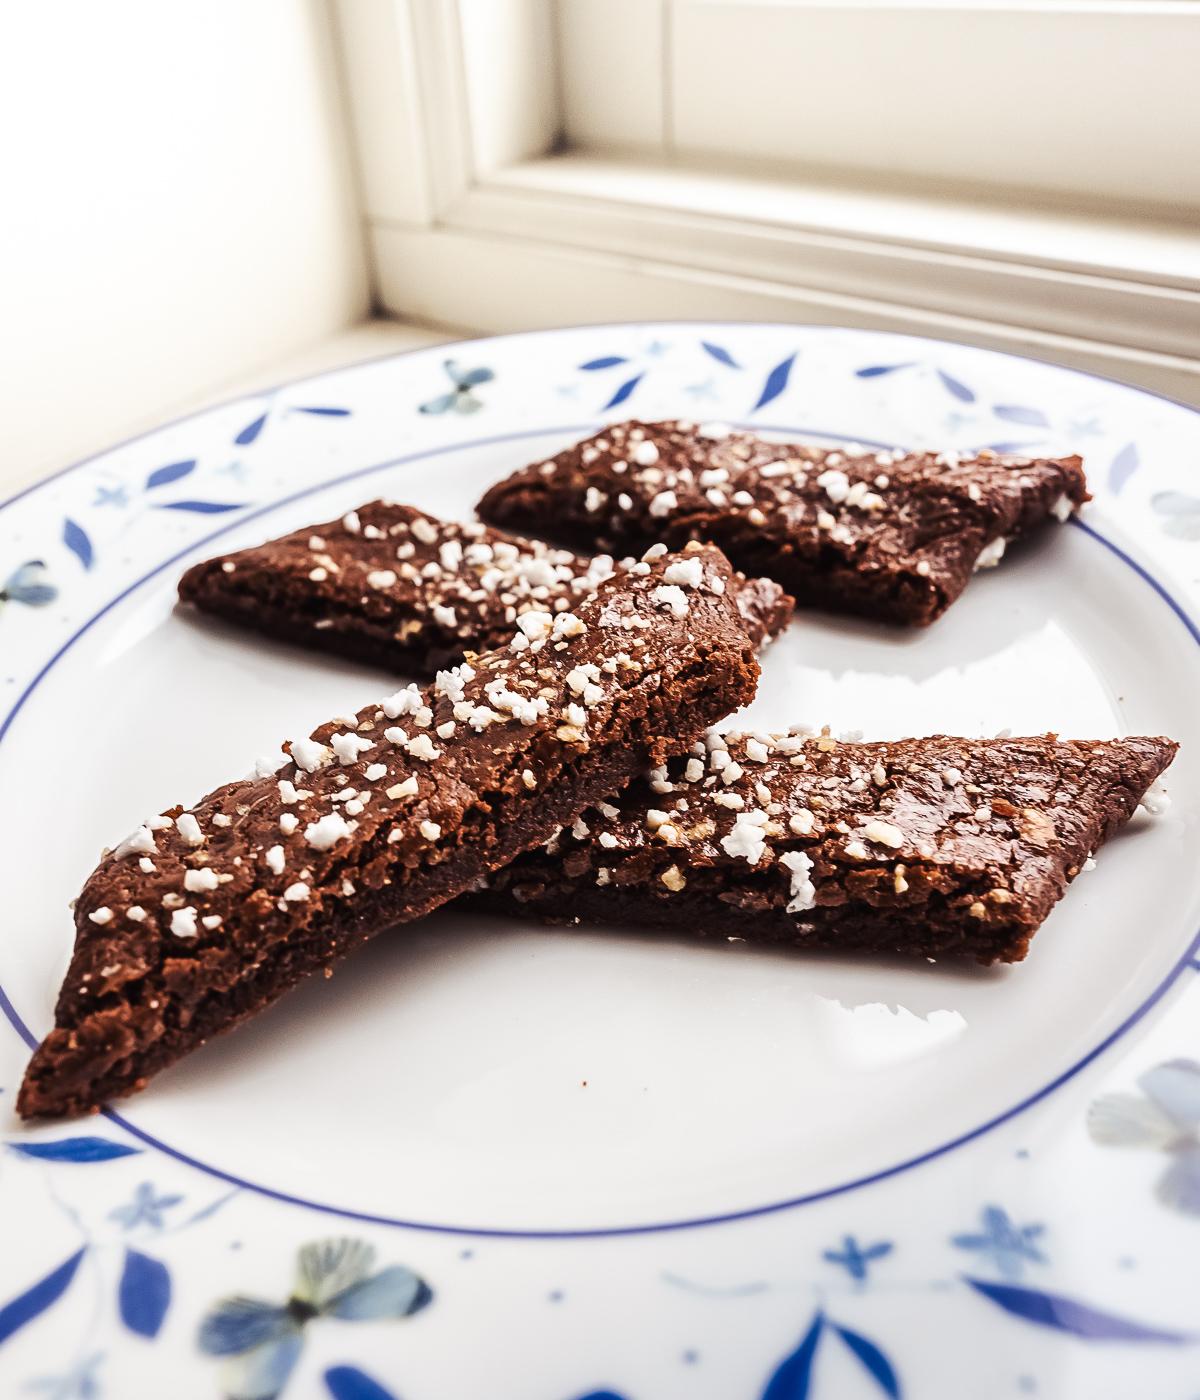 Chokladsnittar Swedish chocolate cookies